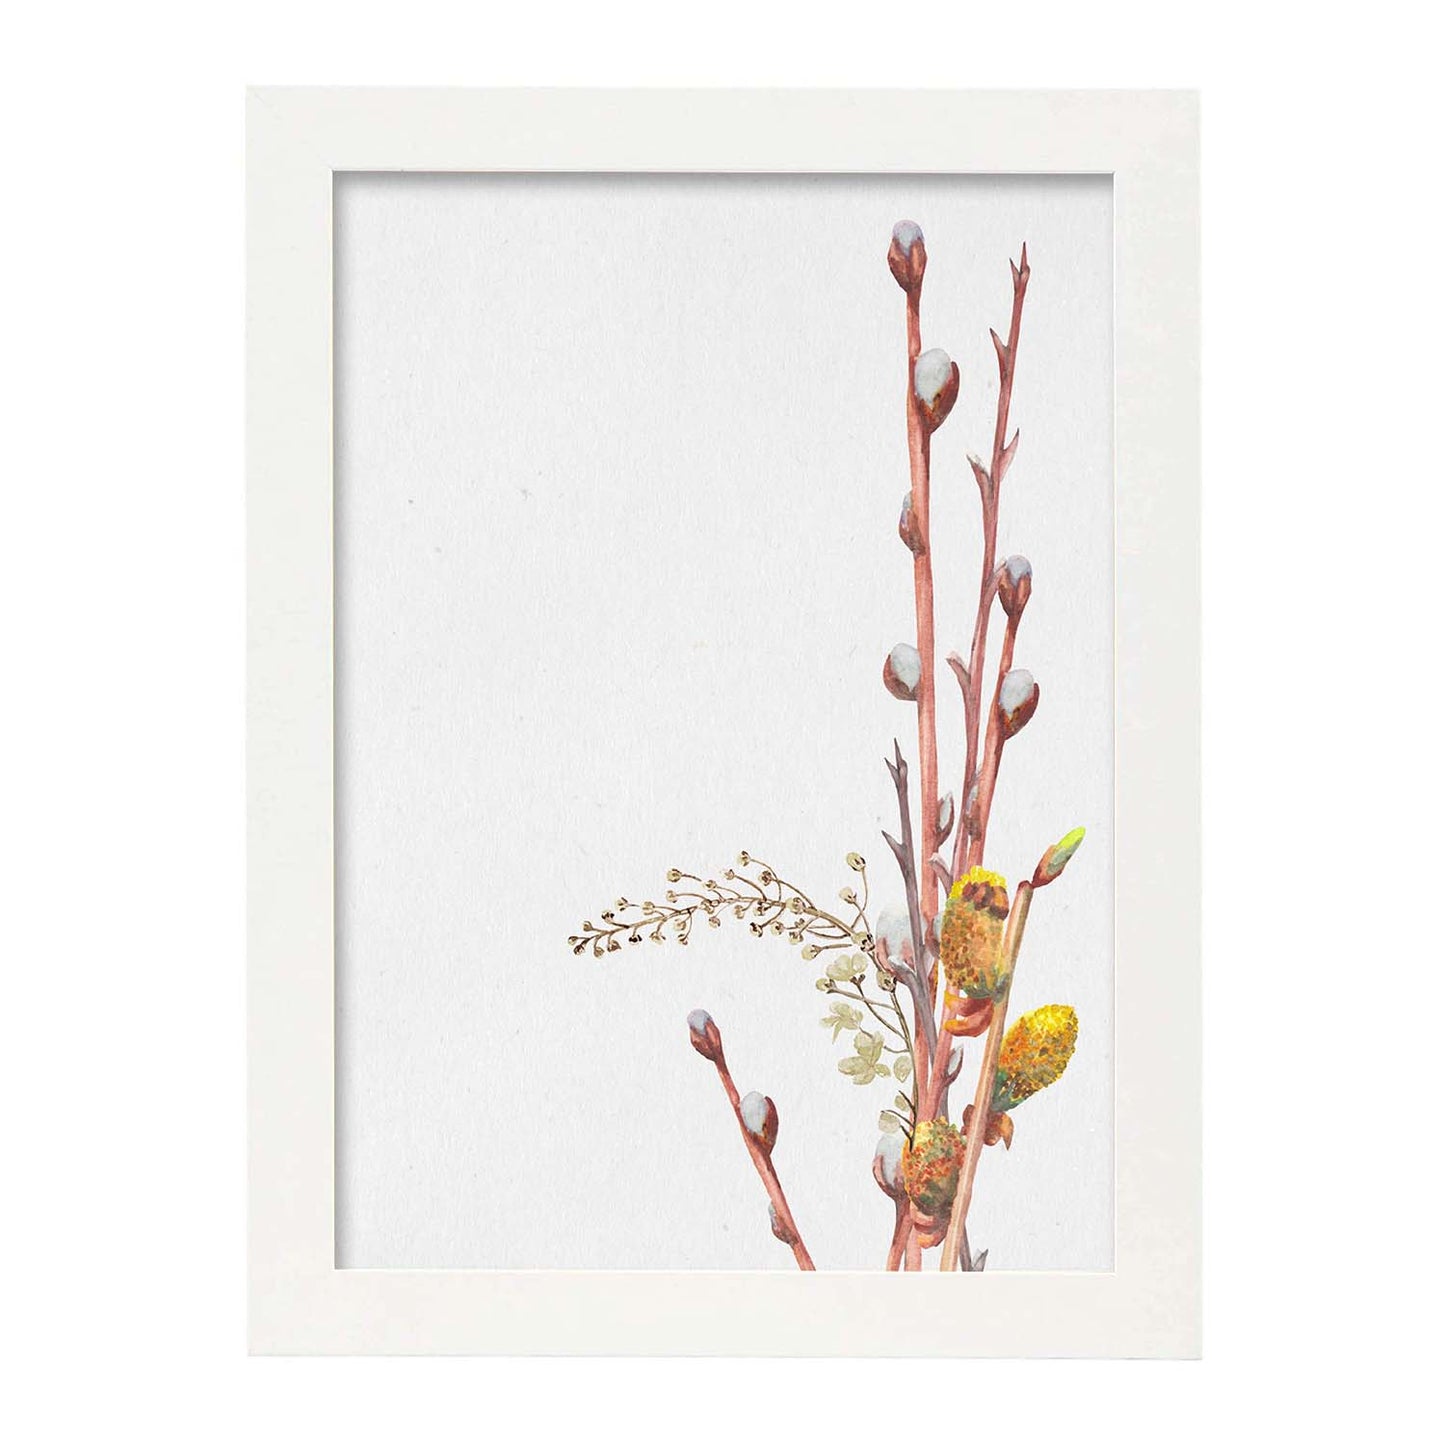 Poster de ramas con estilo de óleo. Lámina Ramas 8, con dibujos pintados de ramas, hojas, y flores.-Artwork-Nacnic-A4-Marco Blanco-Nacnic Estudio SL